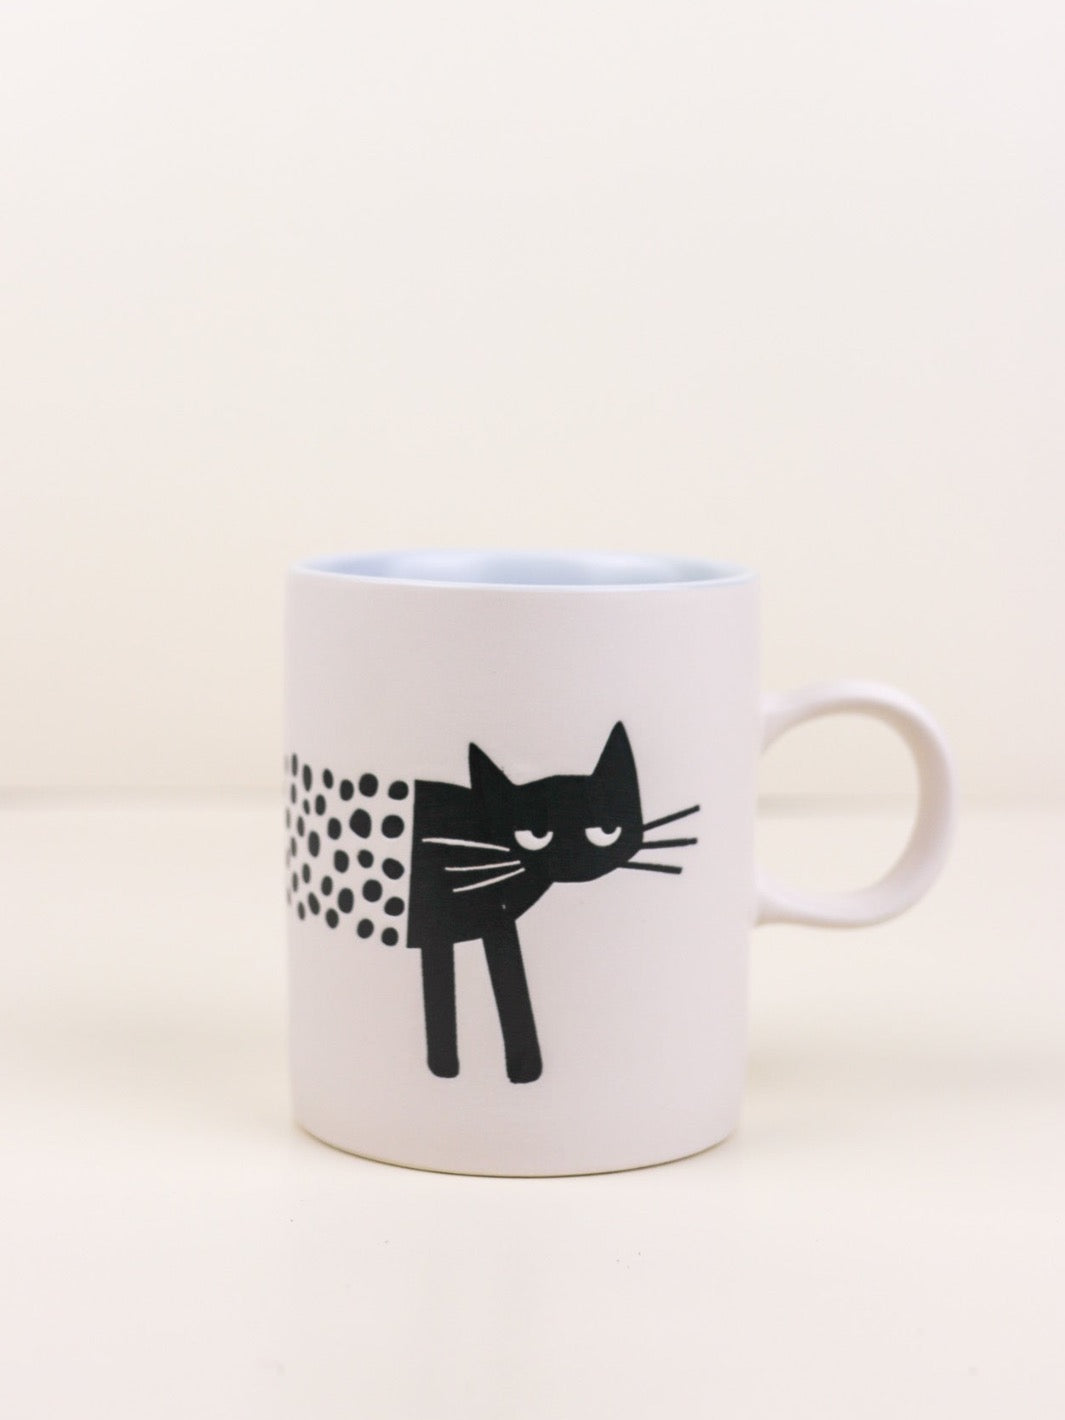 Oliver the Cat Mug - Heyday